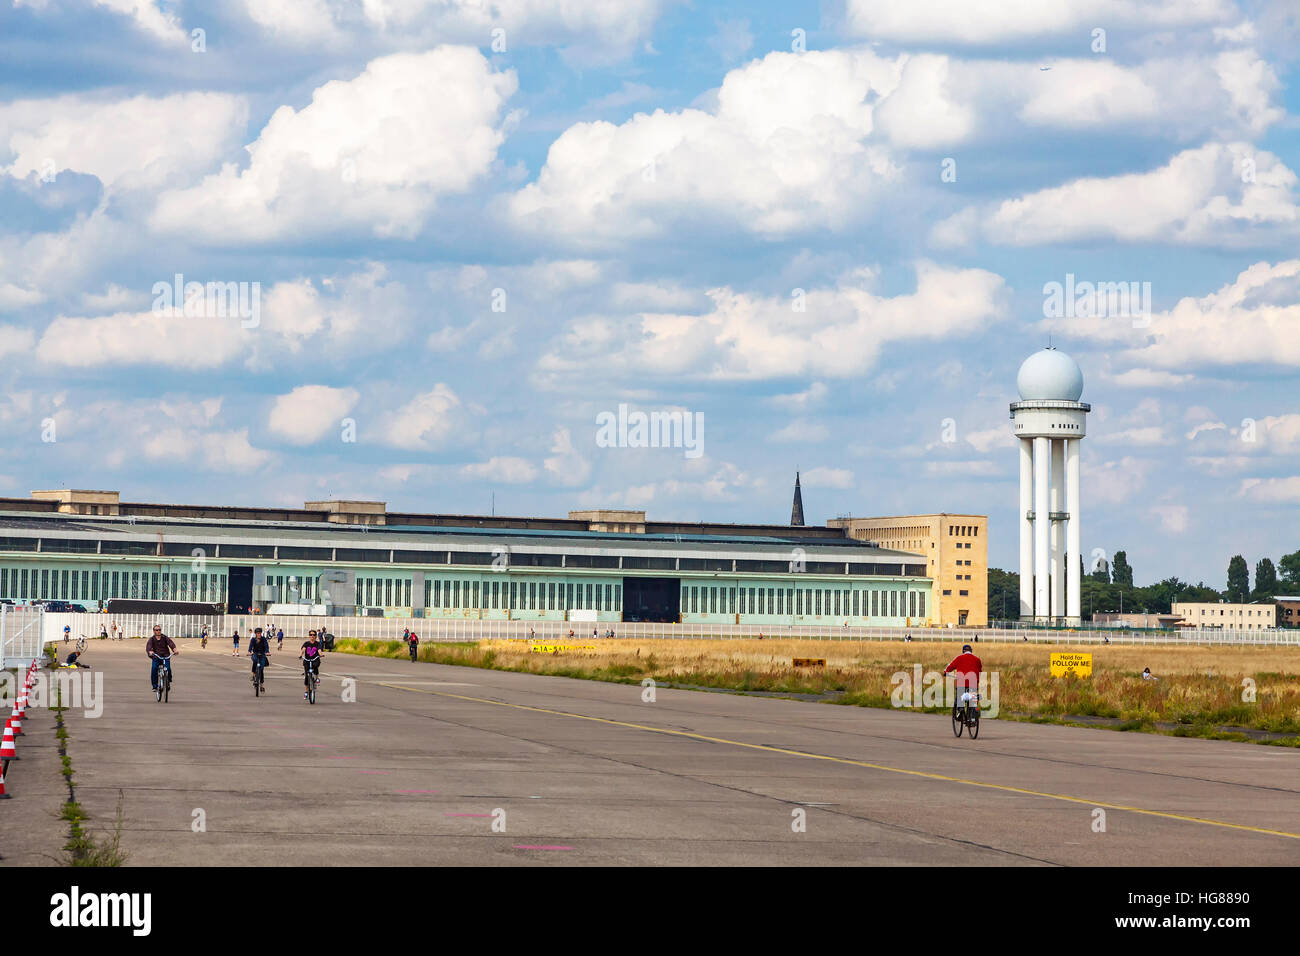 Berlin Tempelhof, ehemaliger Flughafen in Berlin City, Deutschland. Seit 2008 als Erholungsraum bekannt als Tempelhofer Feld Stockfoto